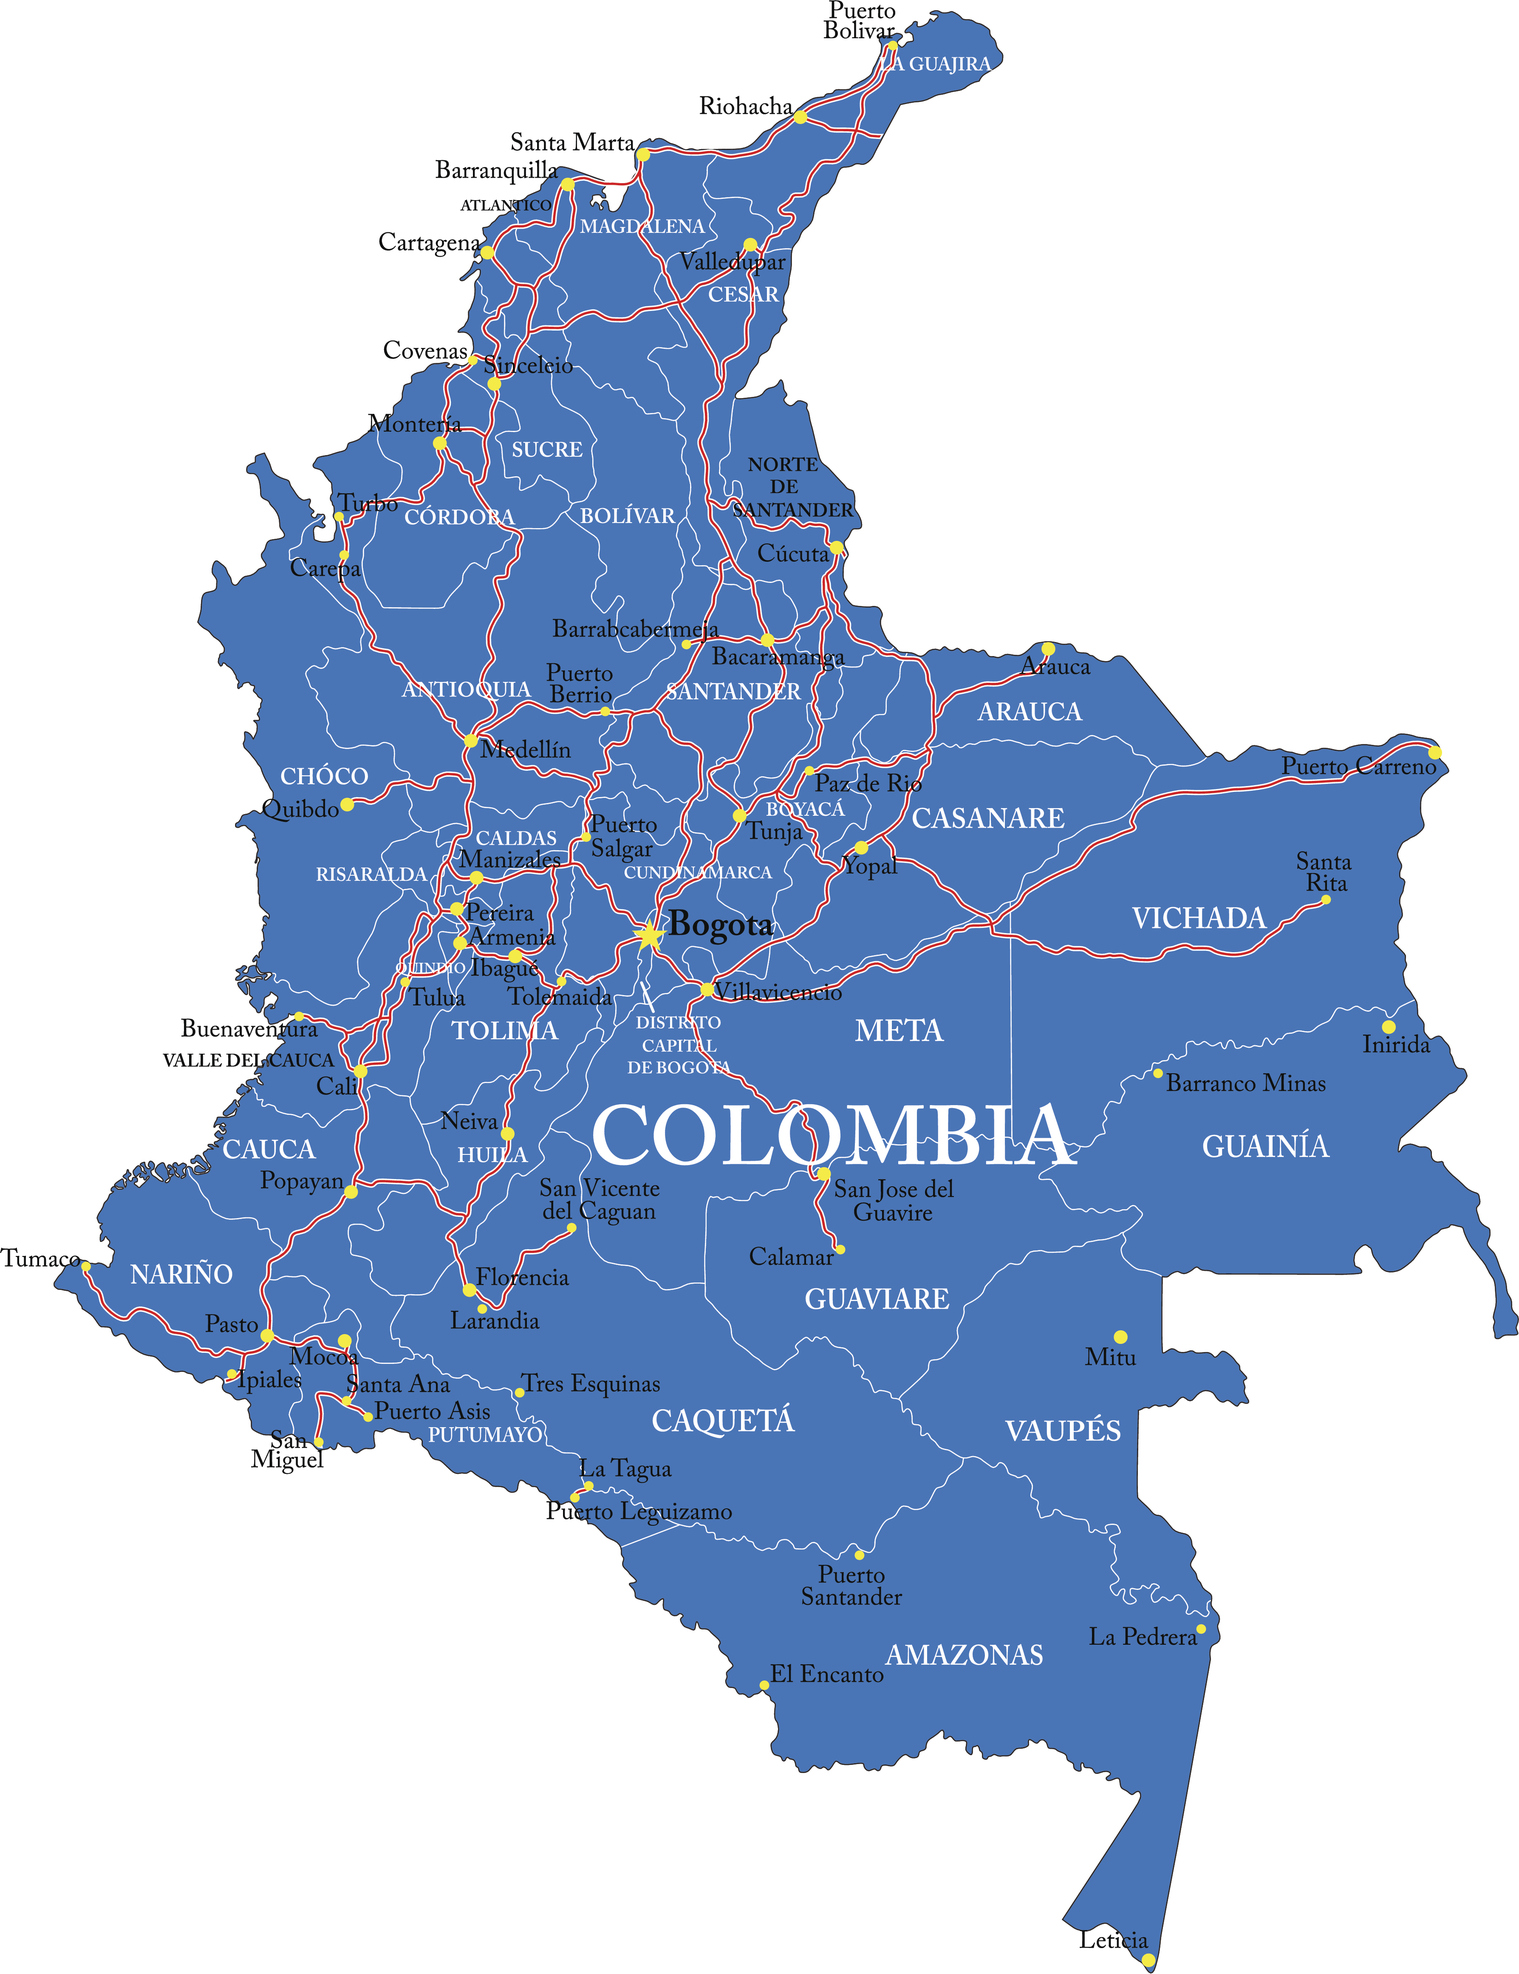 mapa de Colombia